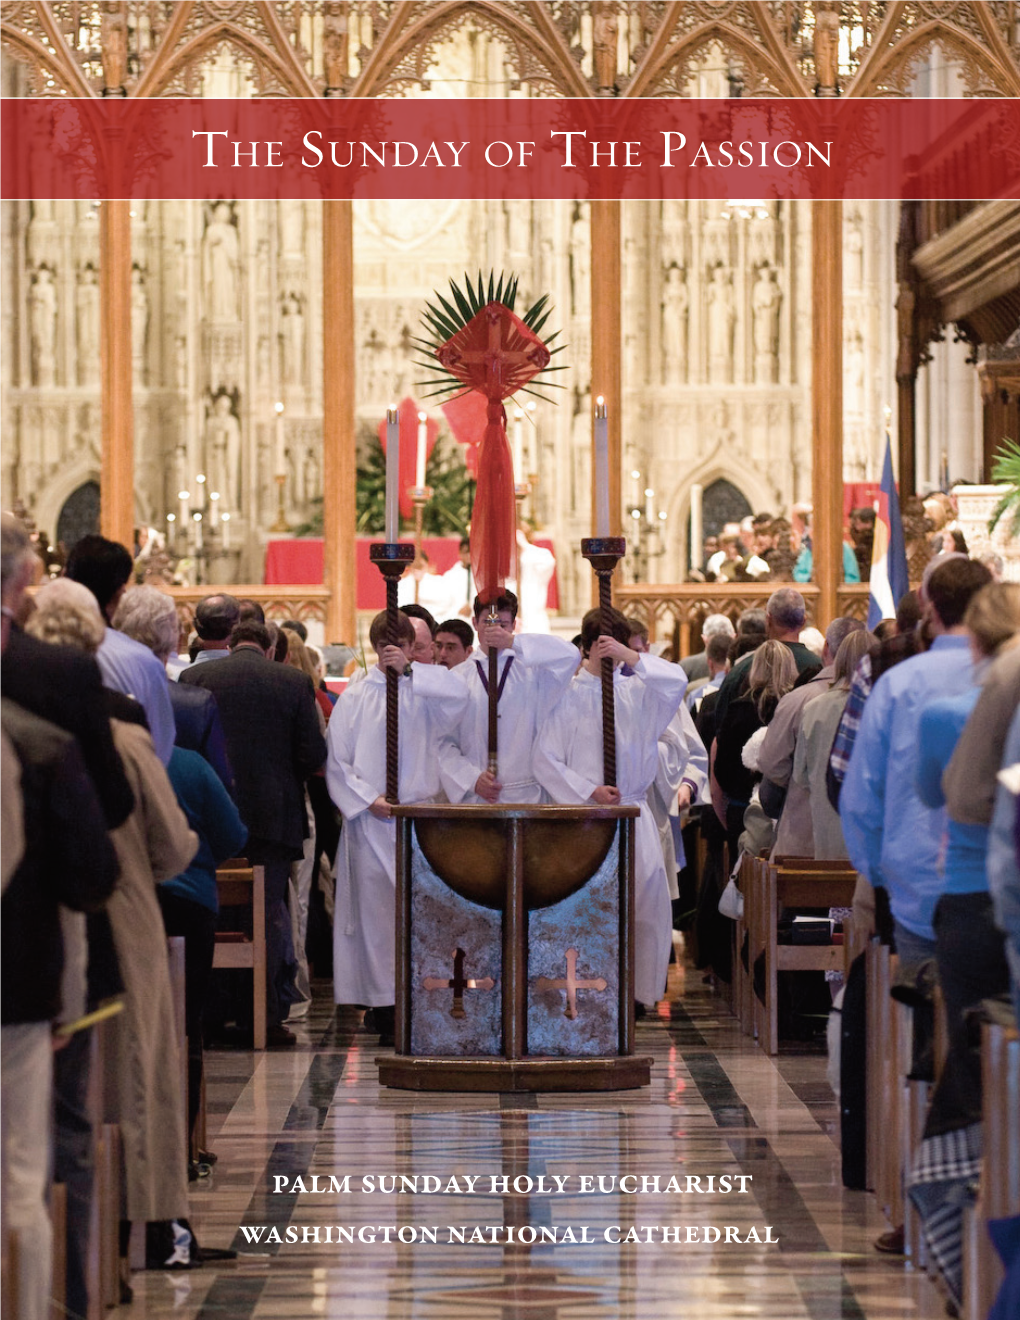 The Sunday of the Passion Palm Sunday Holy Eucharist